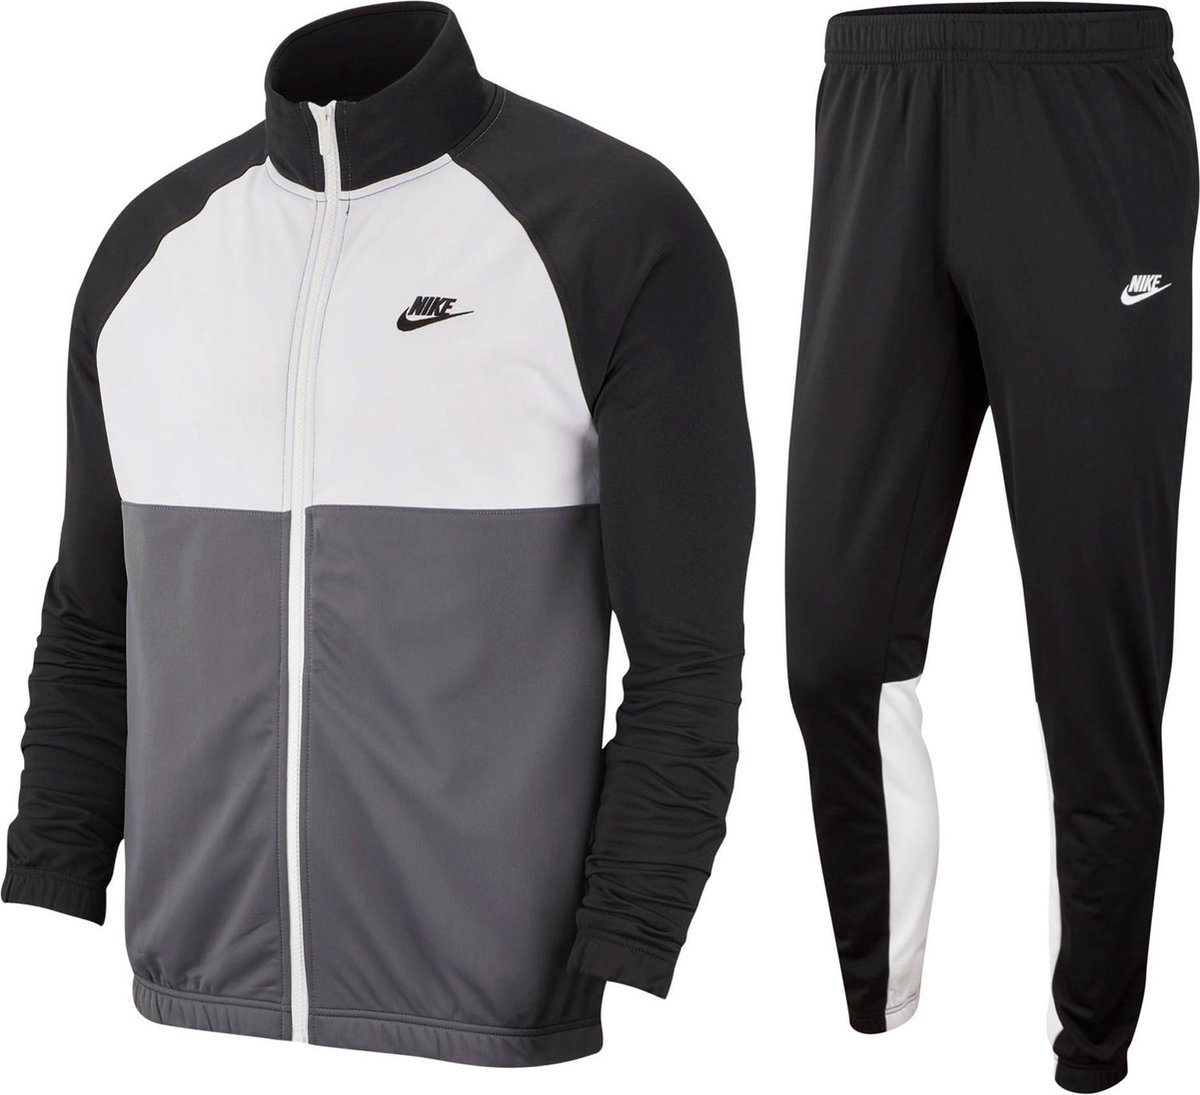 Nike Trainingspak Maat S - Mannen - zwart/wit/grijs |